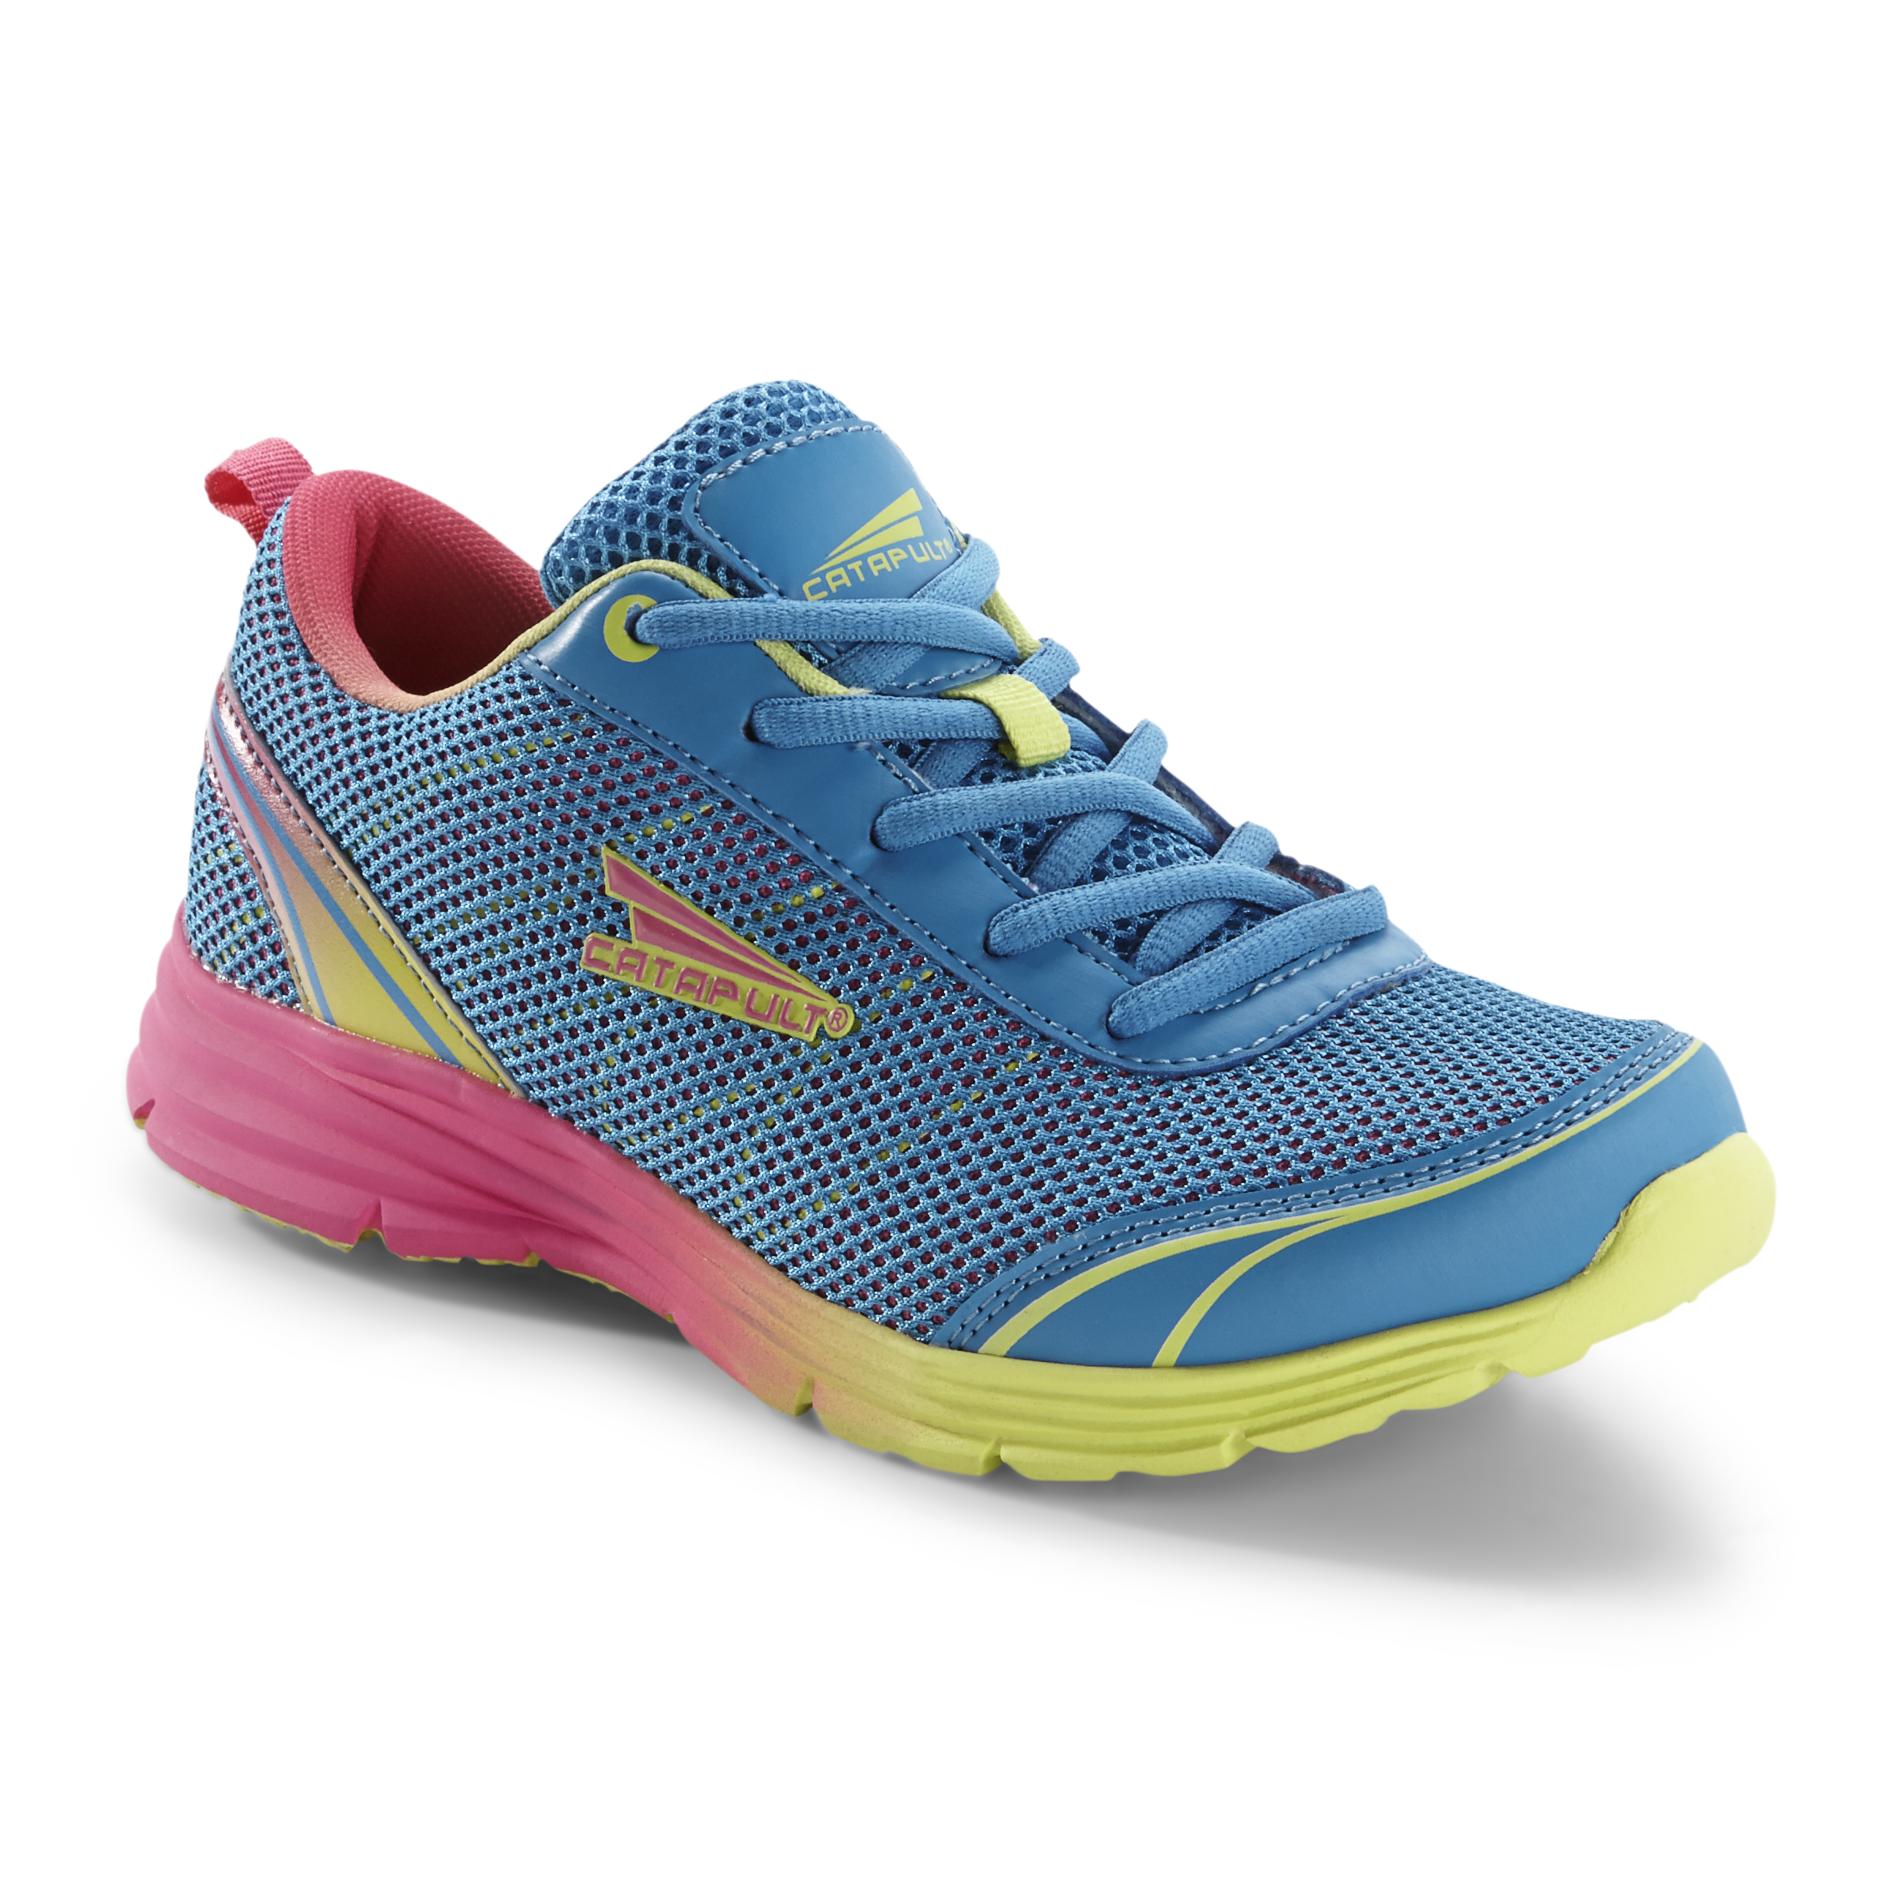 CATAPULT Women's Comet 2 Turquoise Athletic Shoe